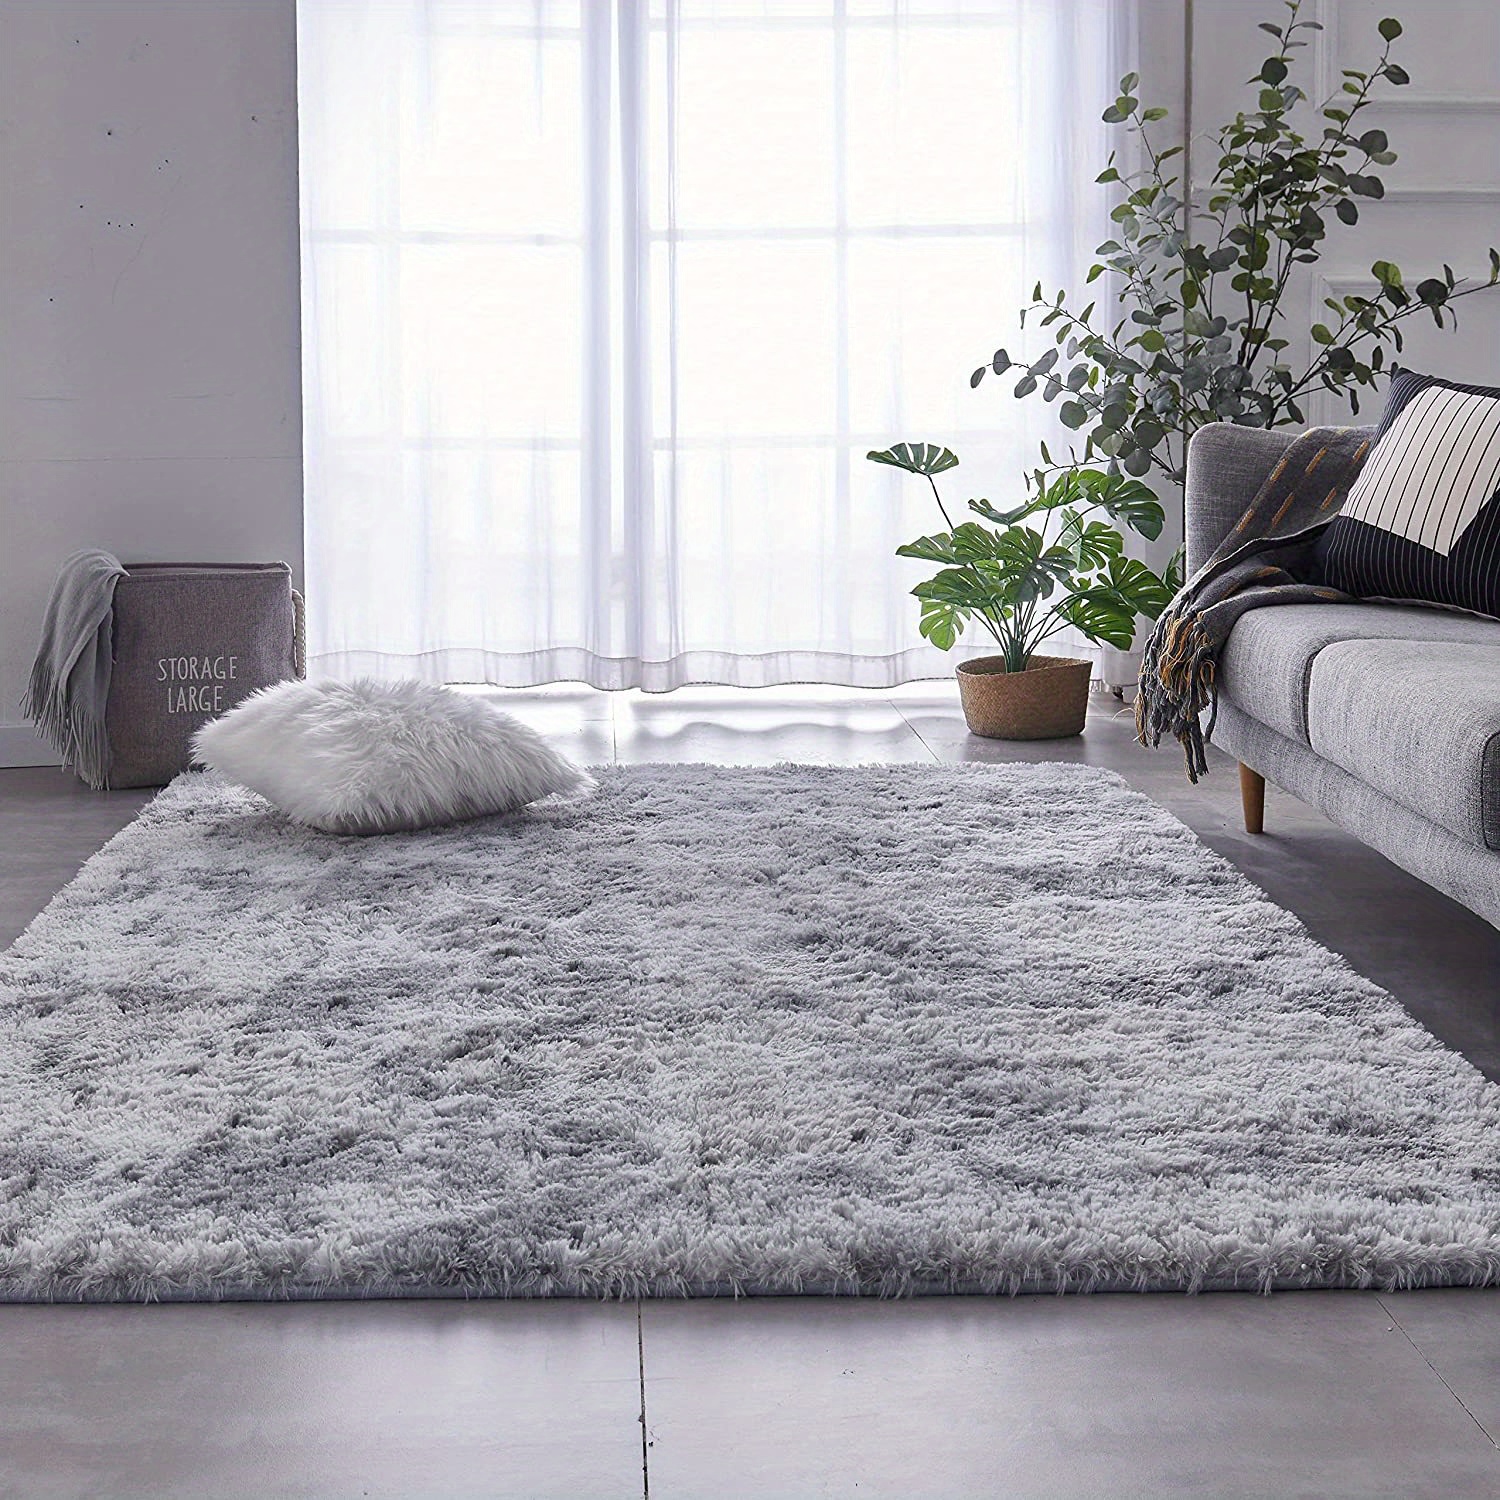 Luxury Brand Supreme Carpets For Living Room Decoration Floor